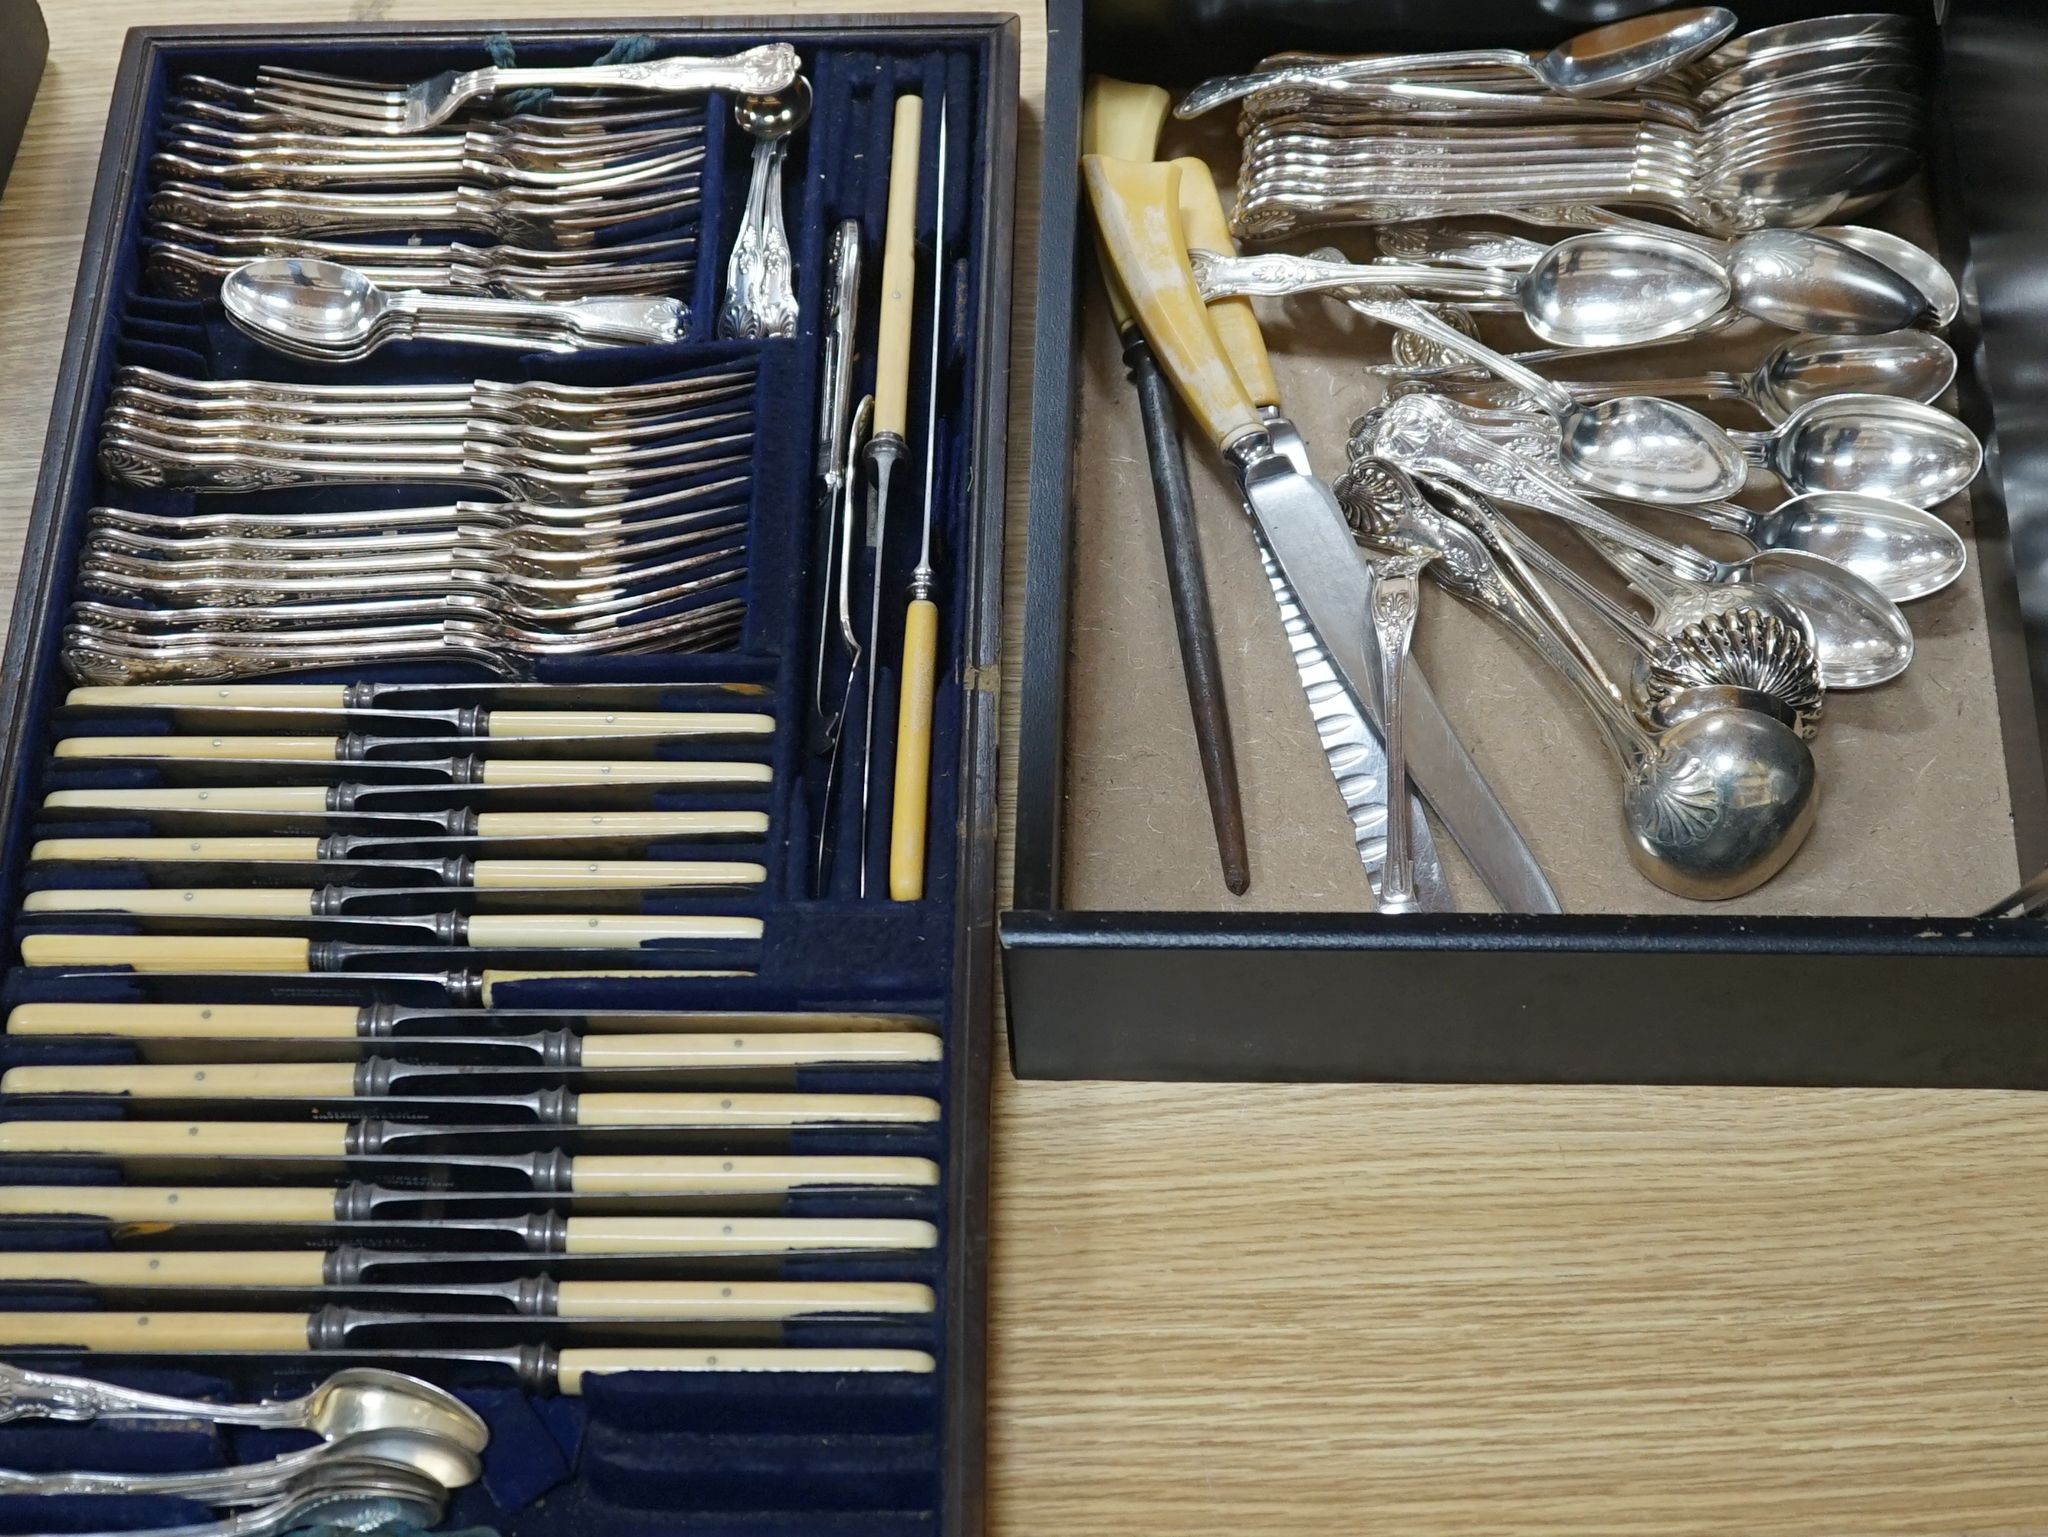 An extensive silver plated cutlery set